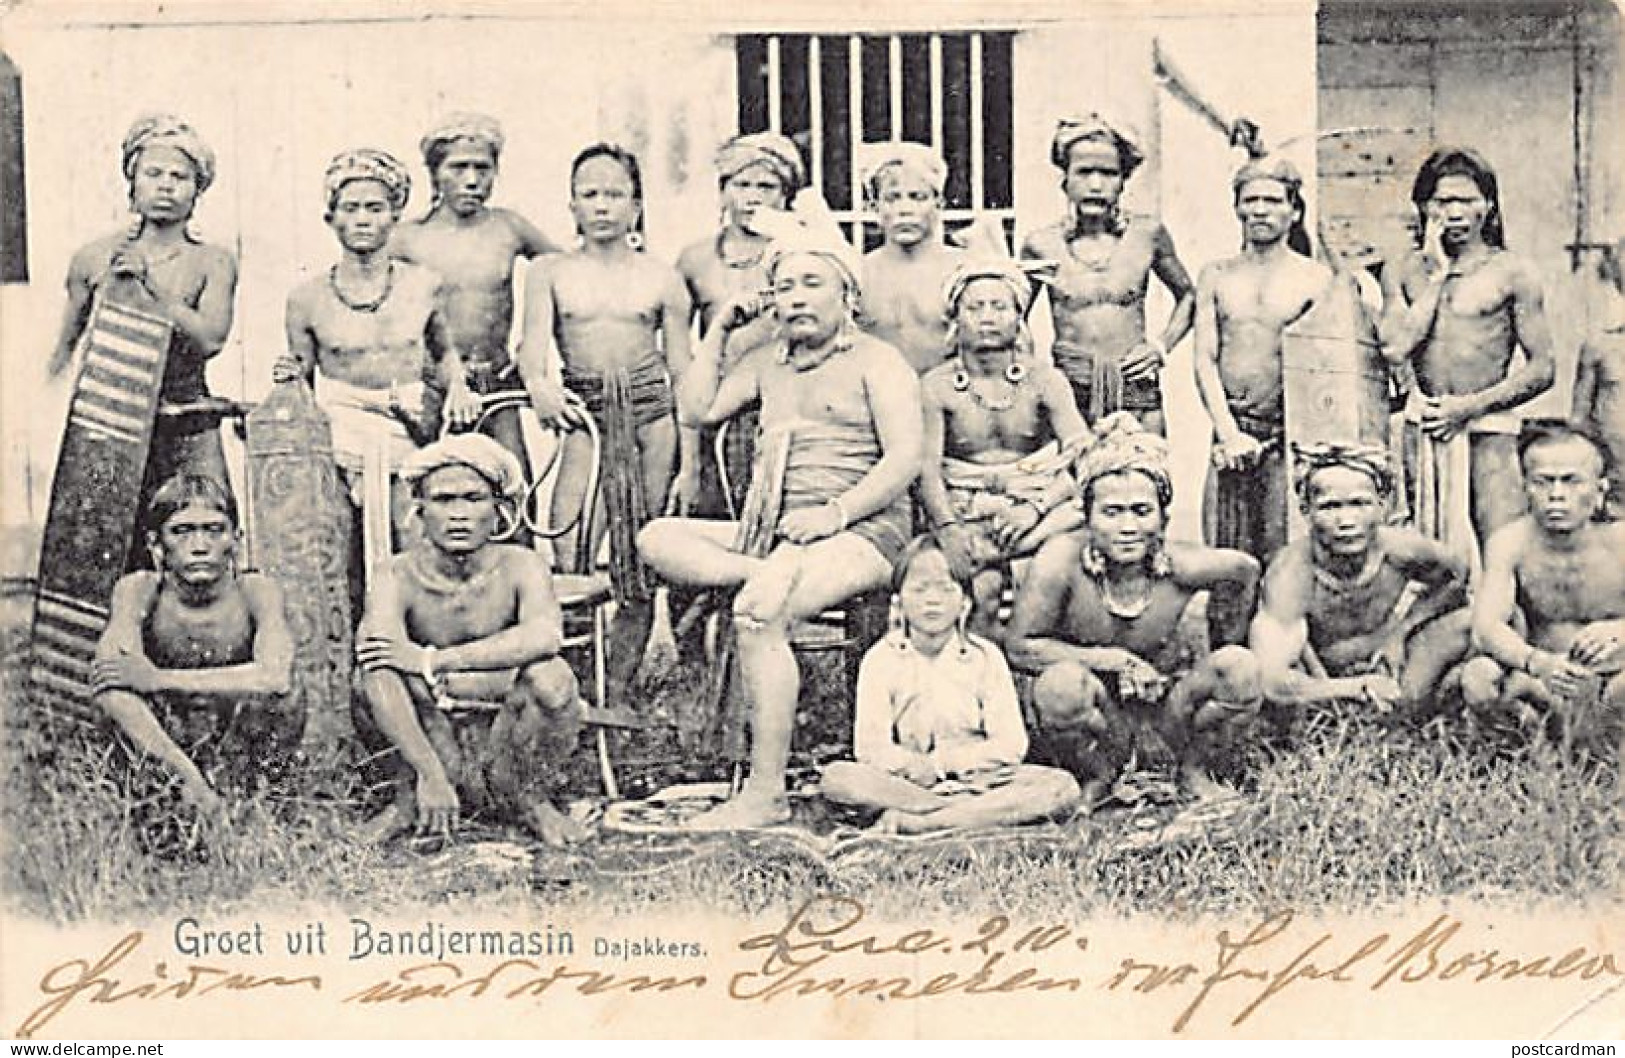 Indonesia - BANJARMASIN Borneo - Dayak Hunters - Indonesien